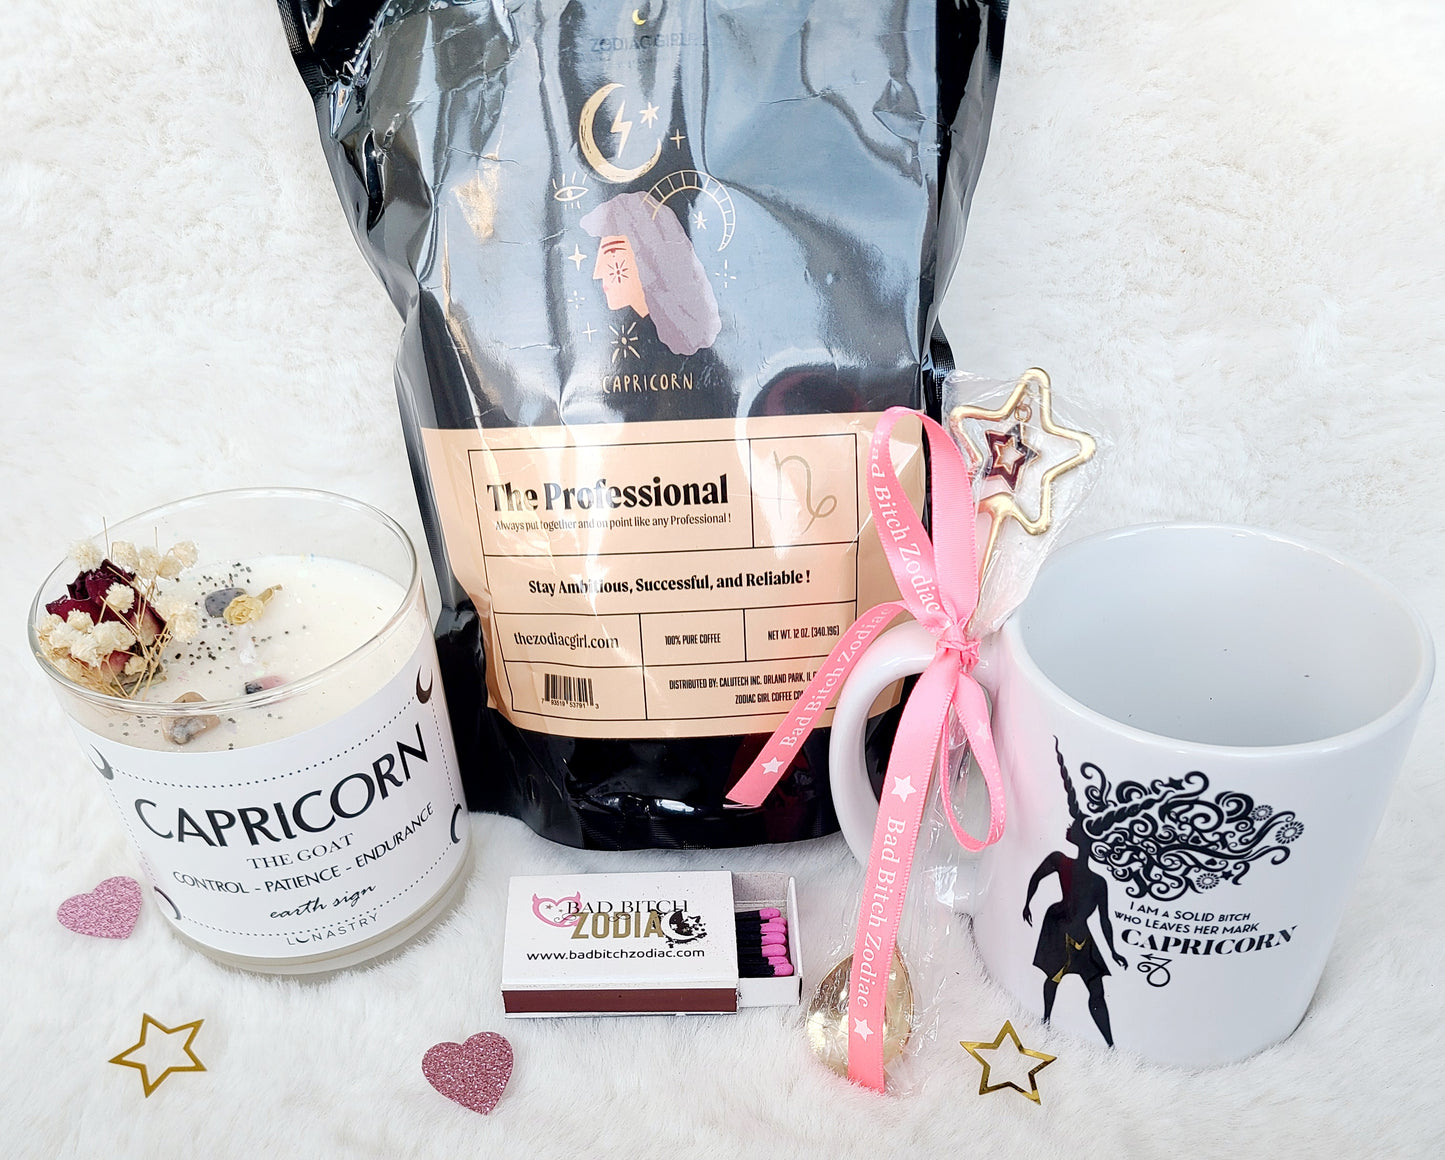 Hot & Rich Coffee Gift Set - Capricorn